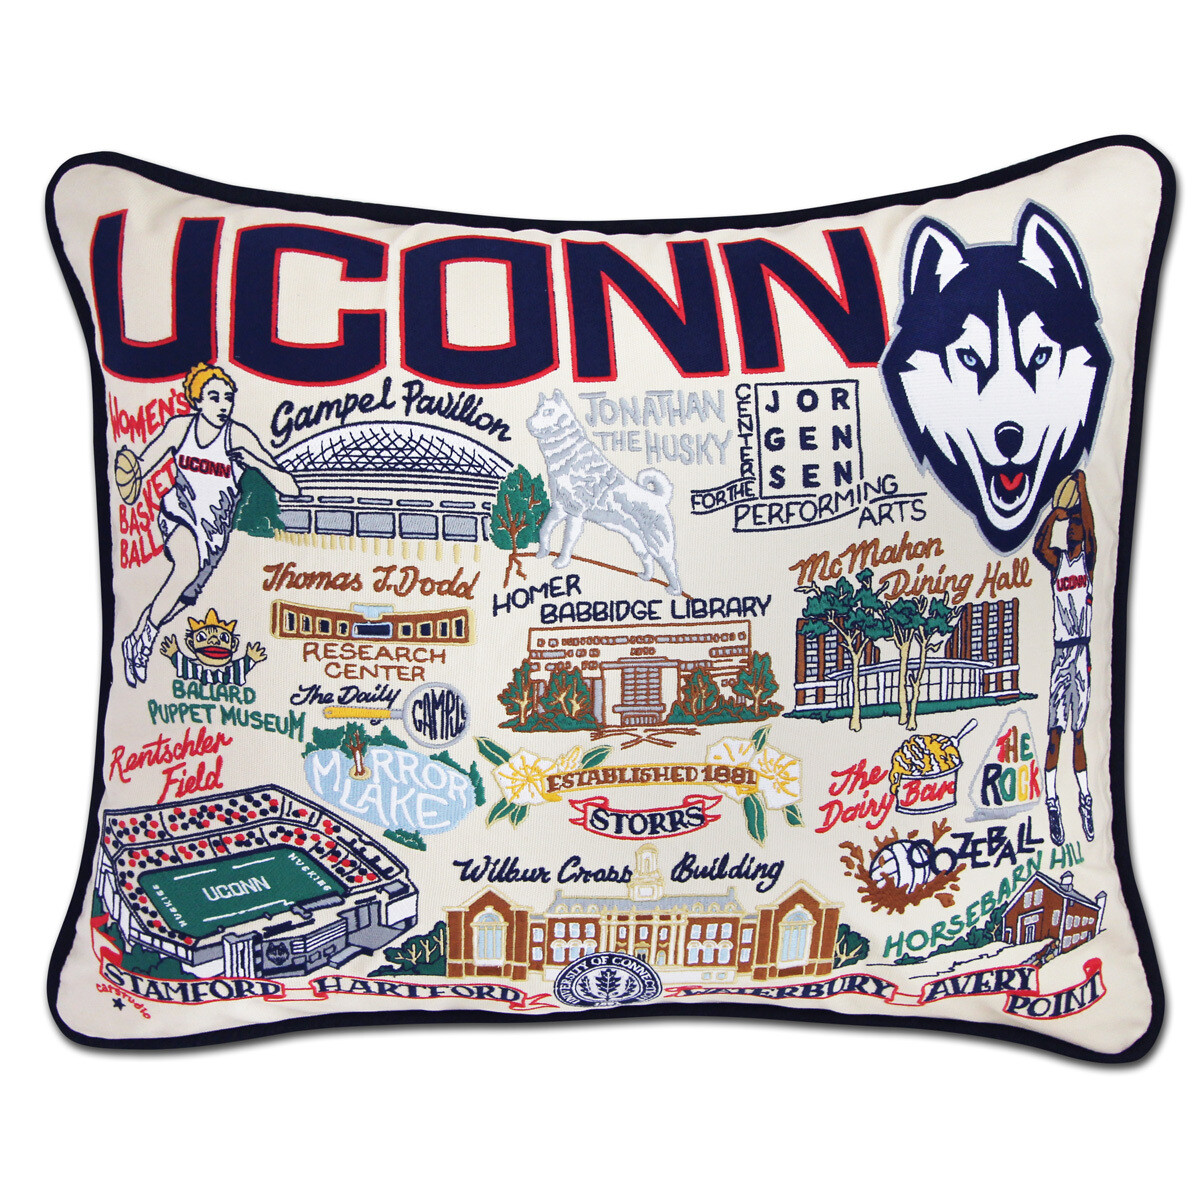 University of Connecticut pillow